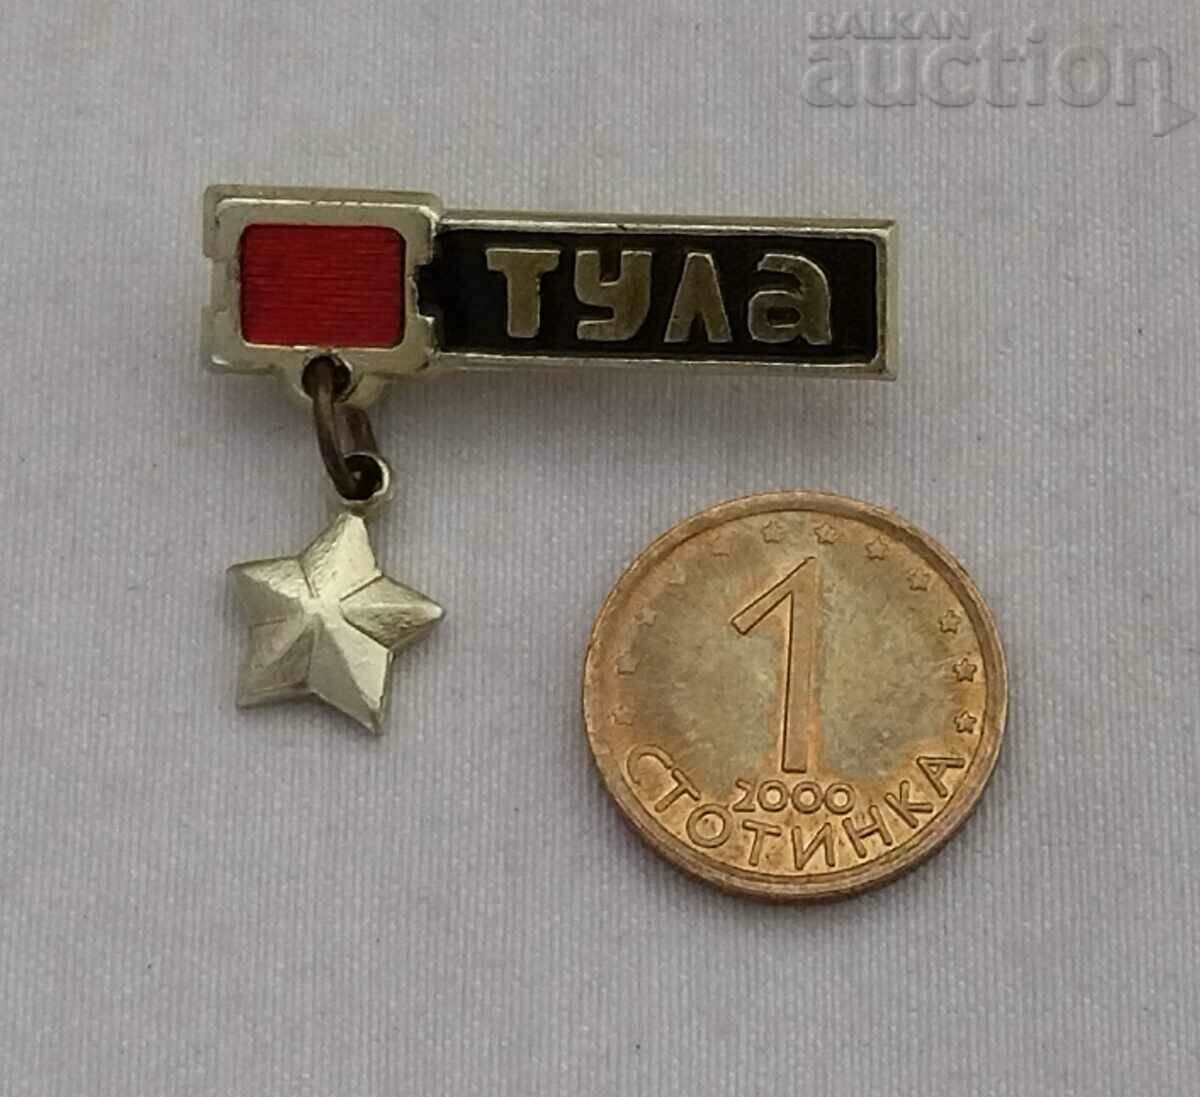 WW2 TULAGRAD-ΗΡΩΑ ΕΣΣΔΙΑ ΣΗΜΑ